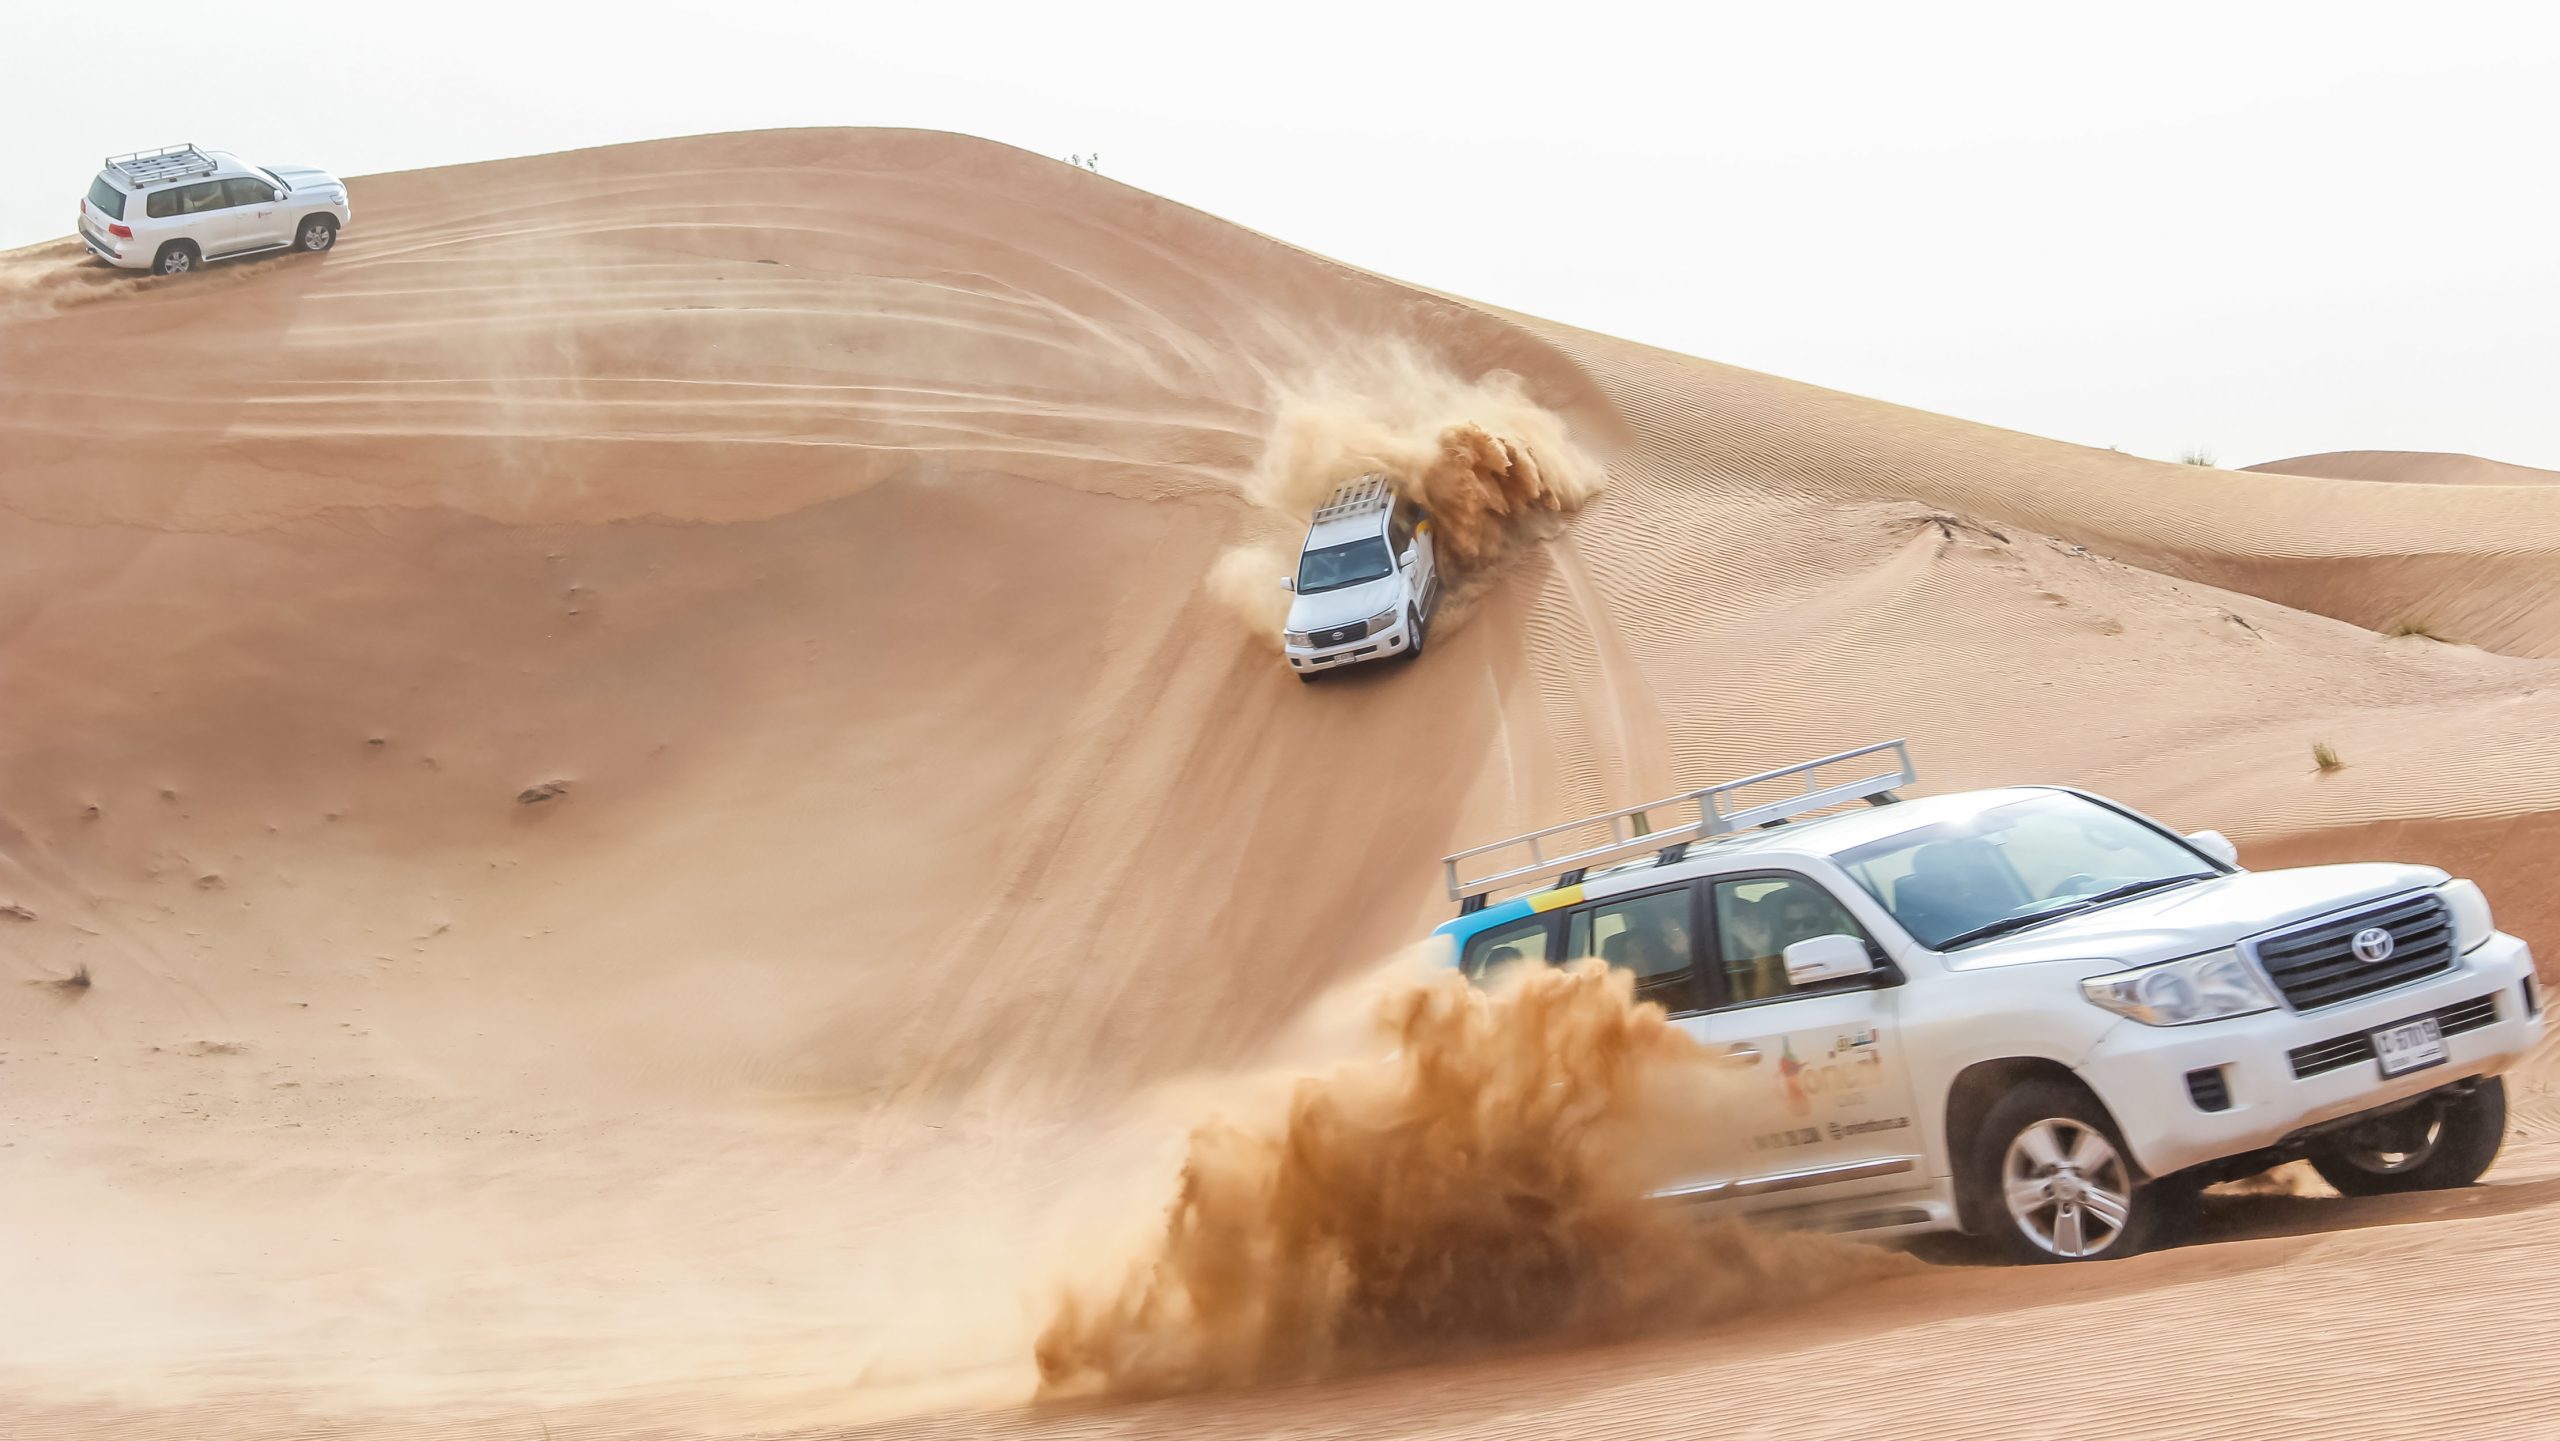 How much is Desert Safari in Abu Dhabi?